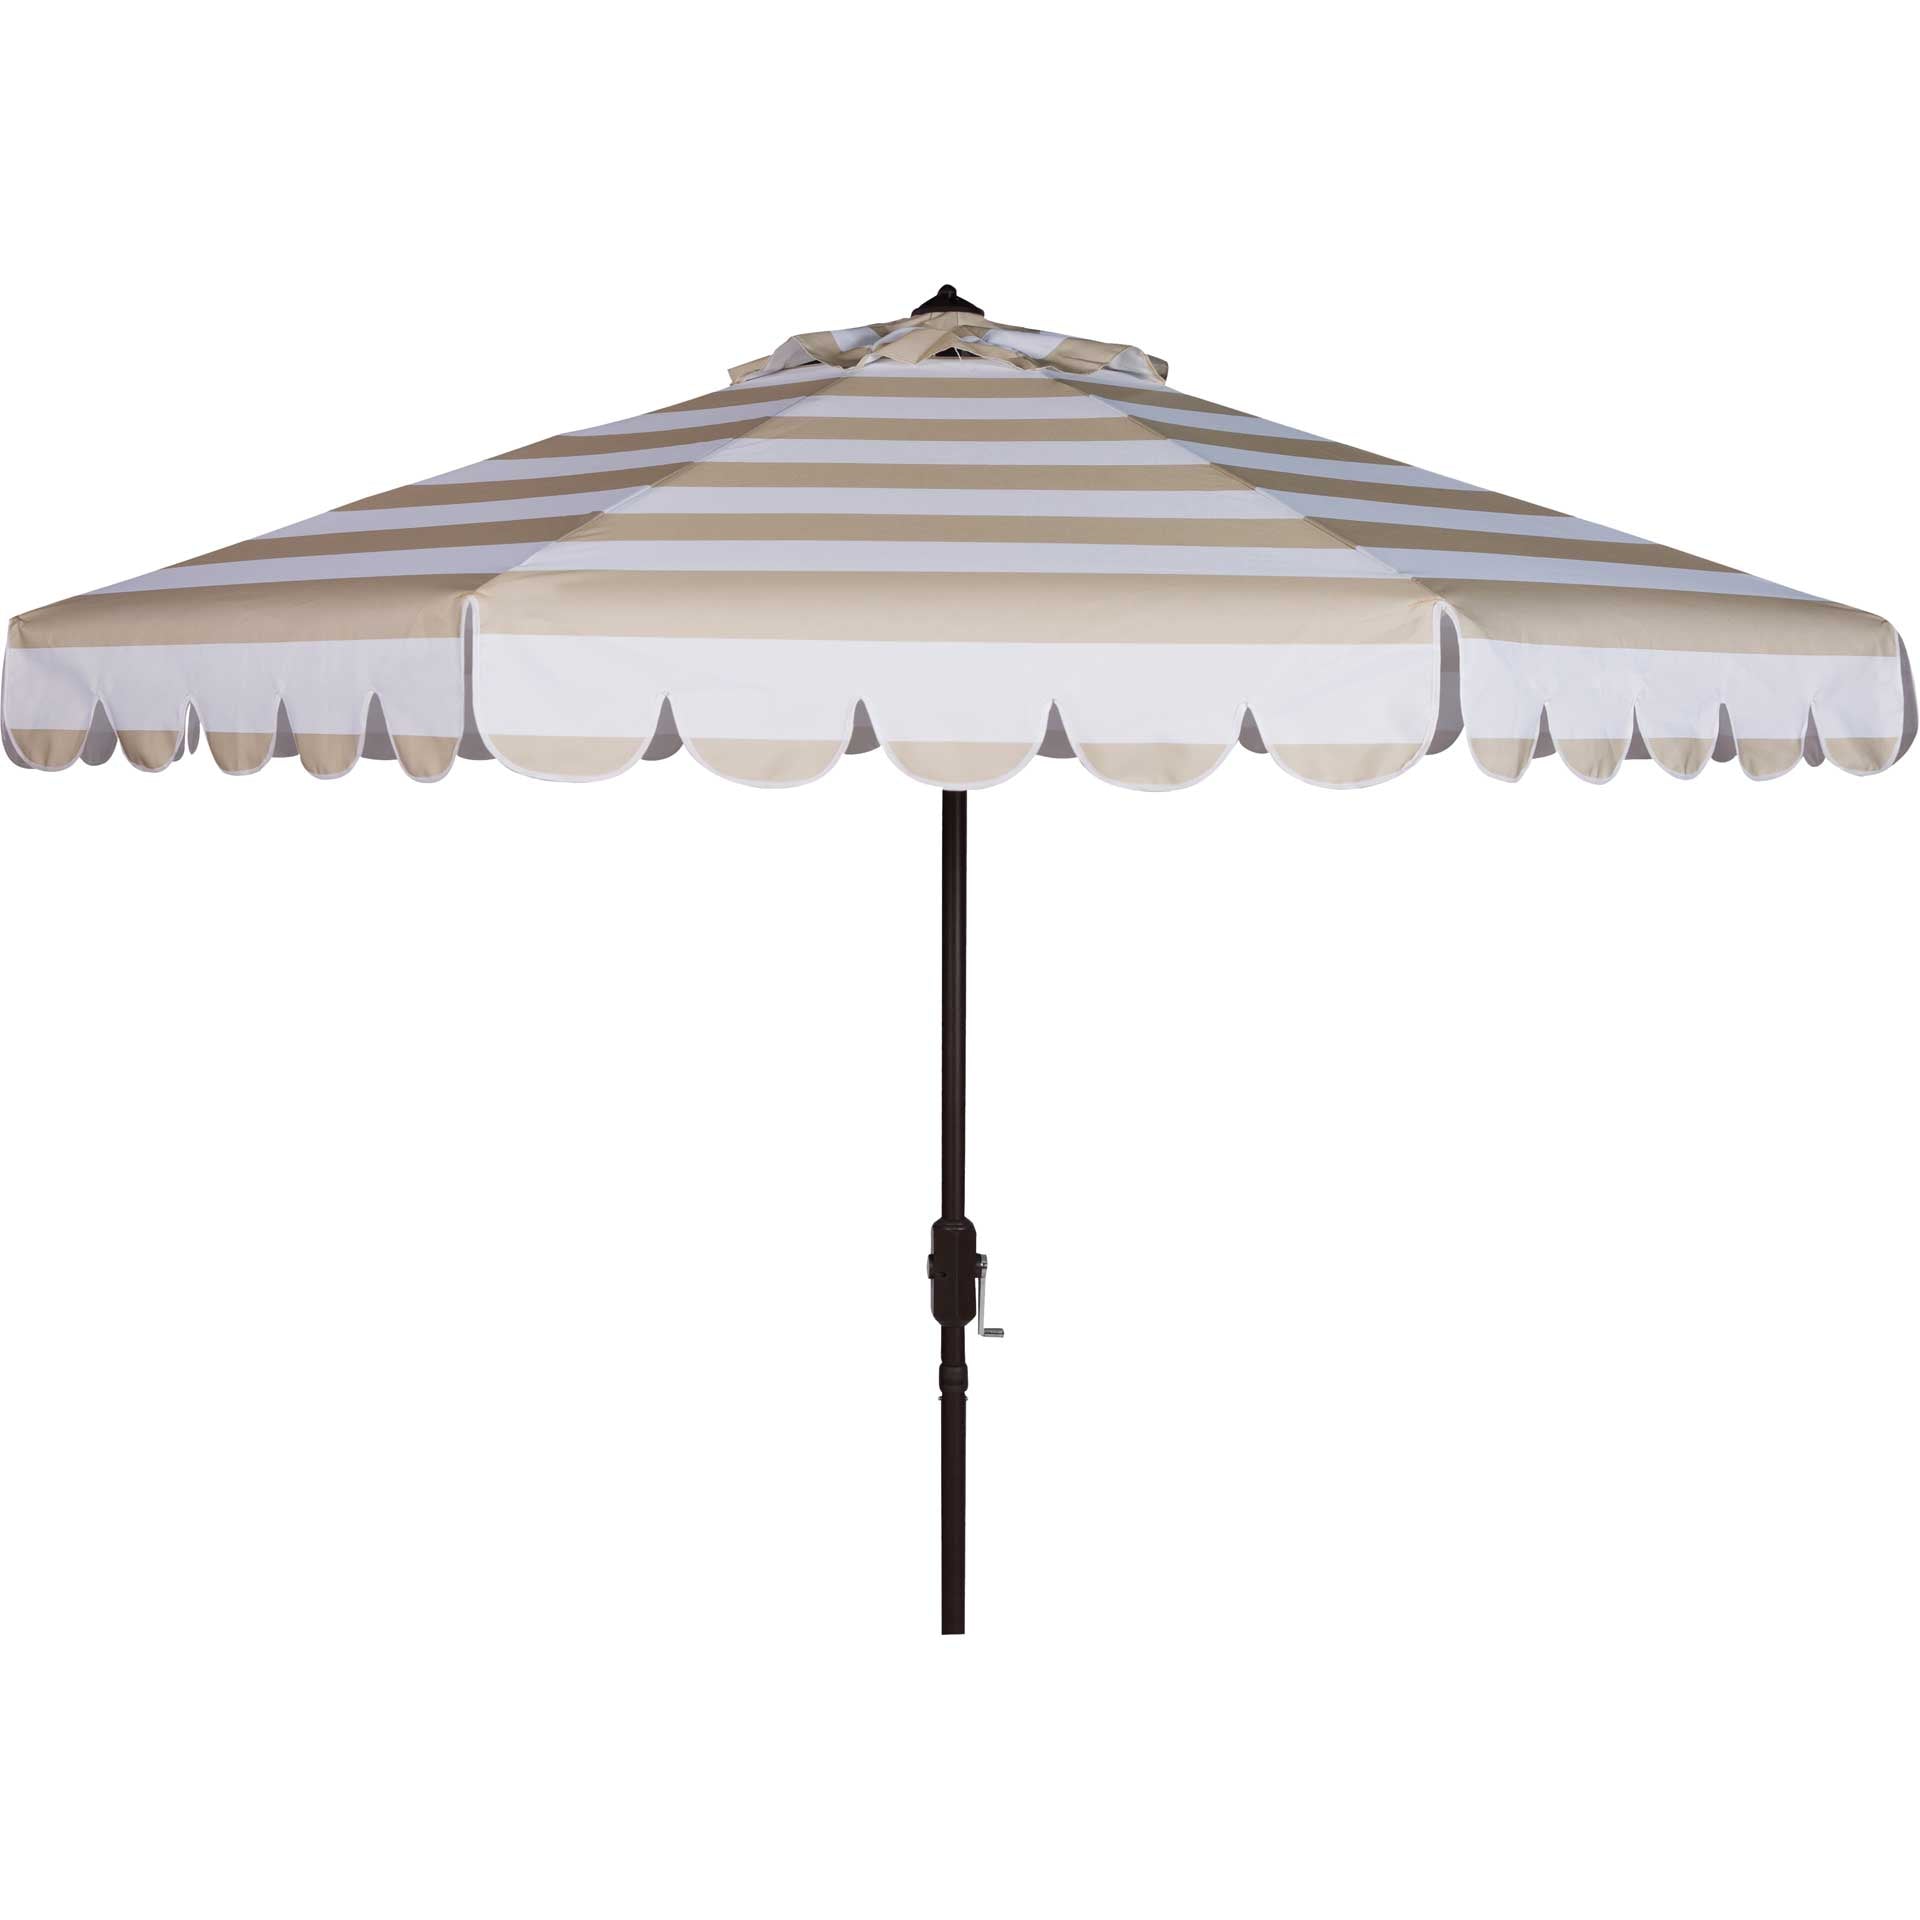 Malakai Single Scallop Push Button Tilt Umbrella Beige/White